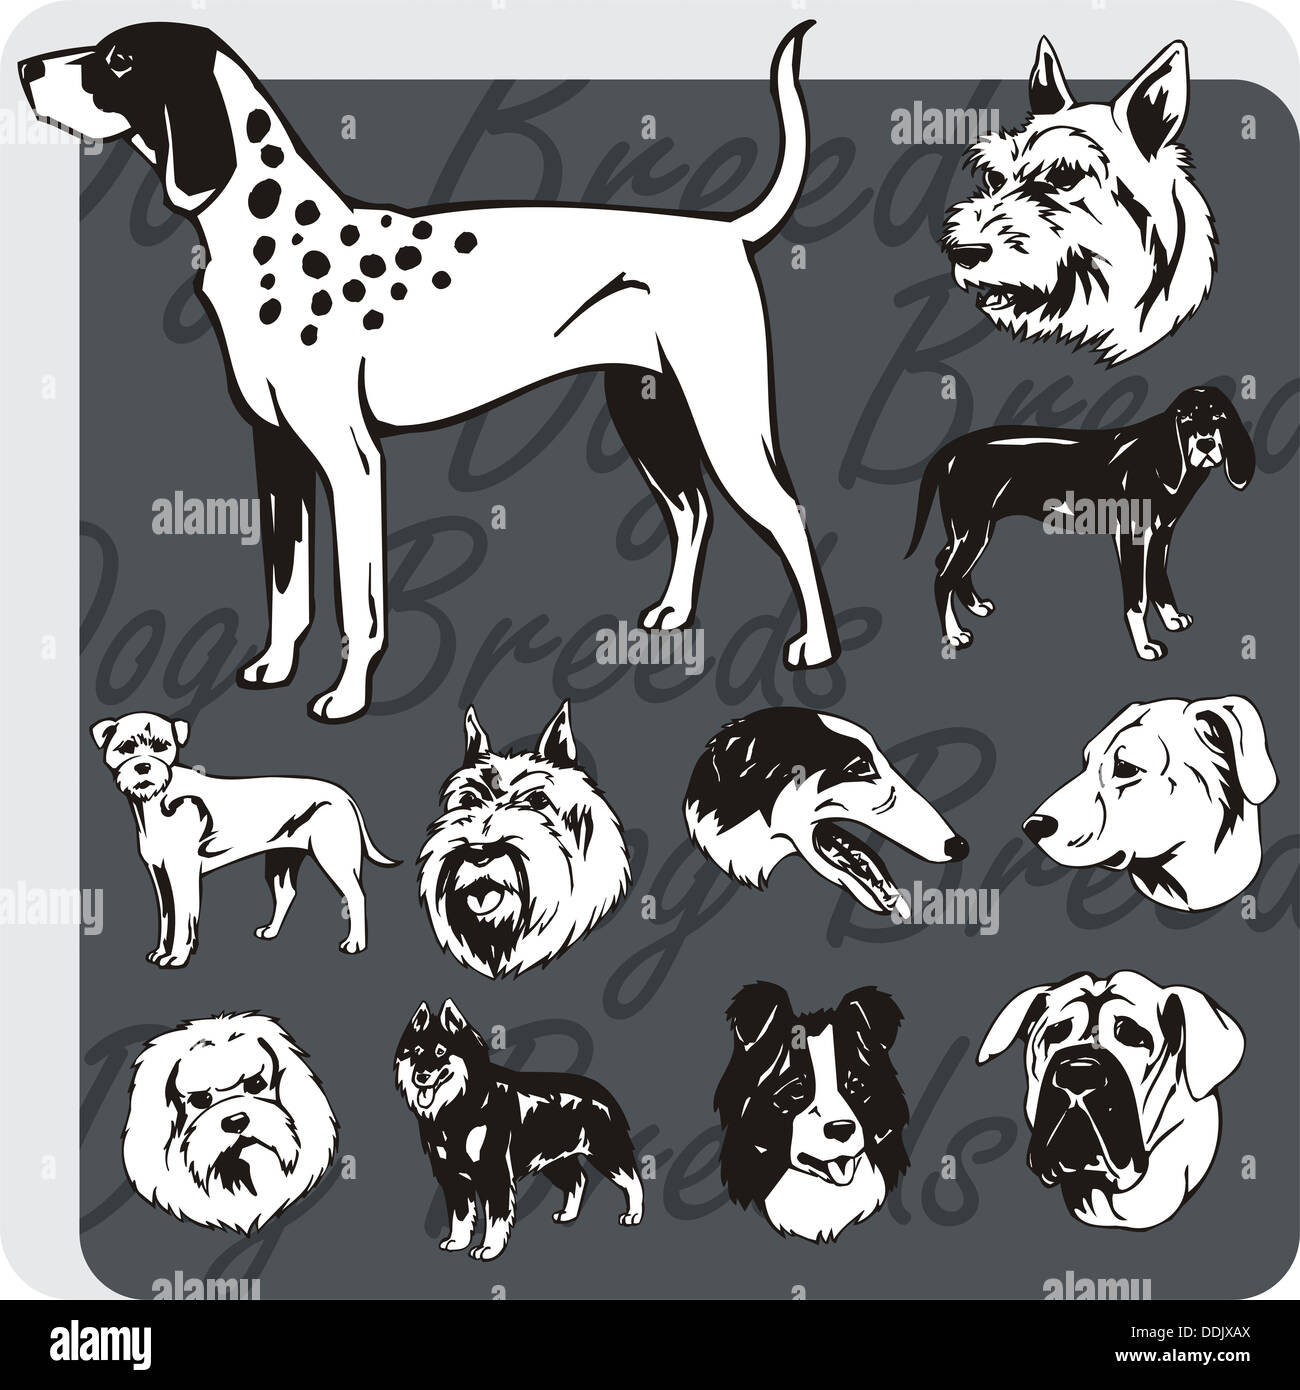 Dog breeds - vinyl-ready  illustration Stock Photo